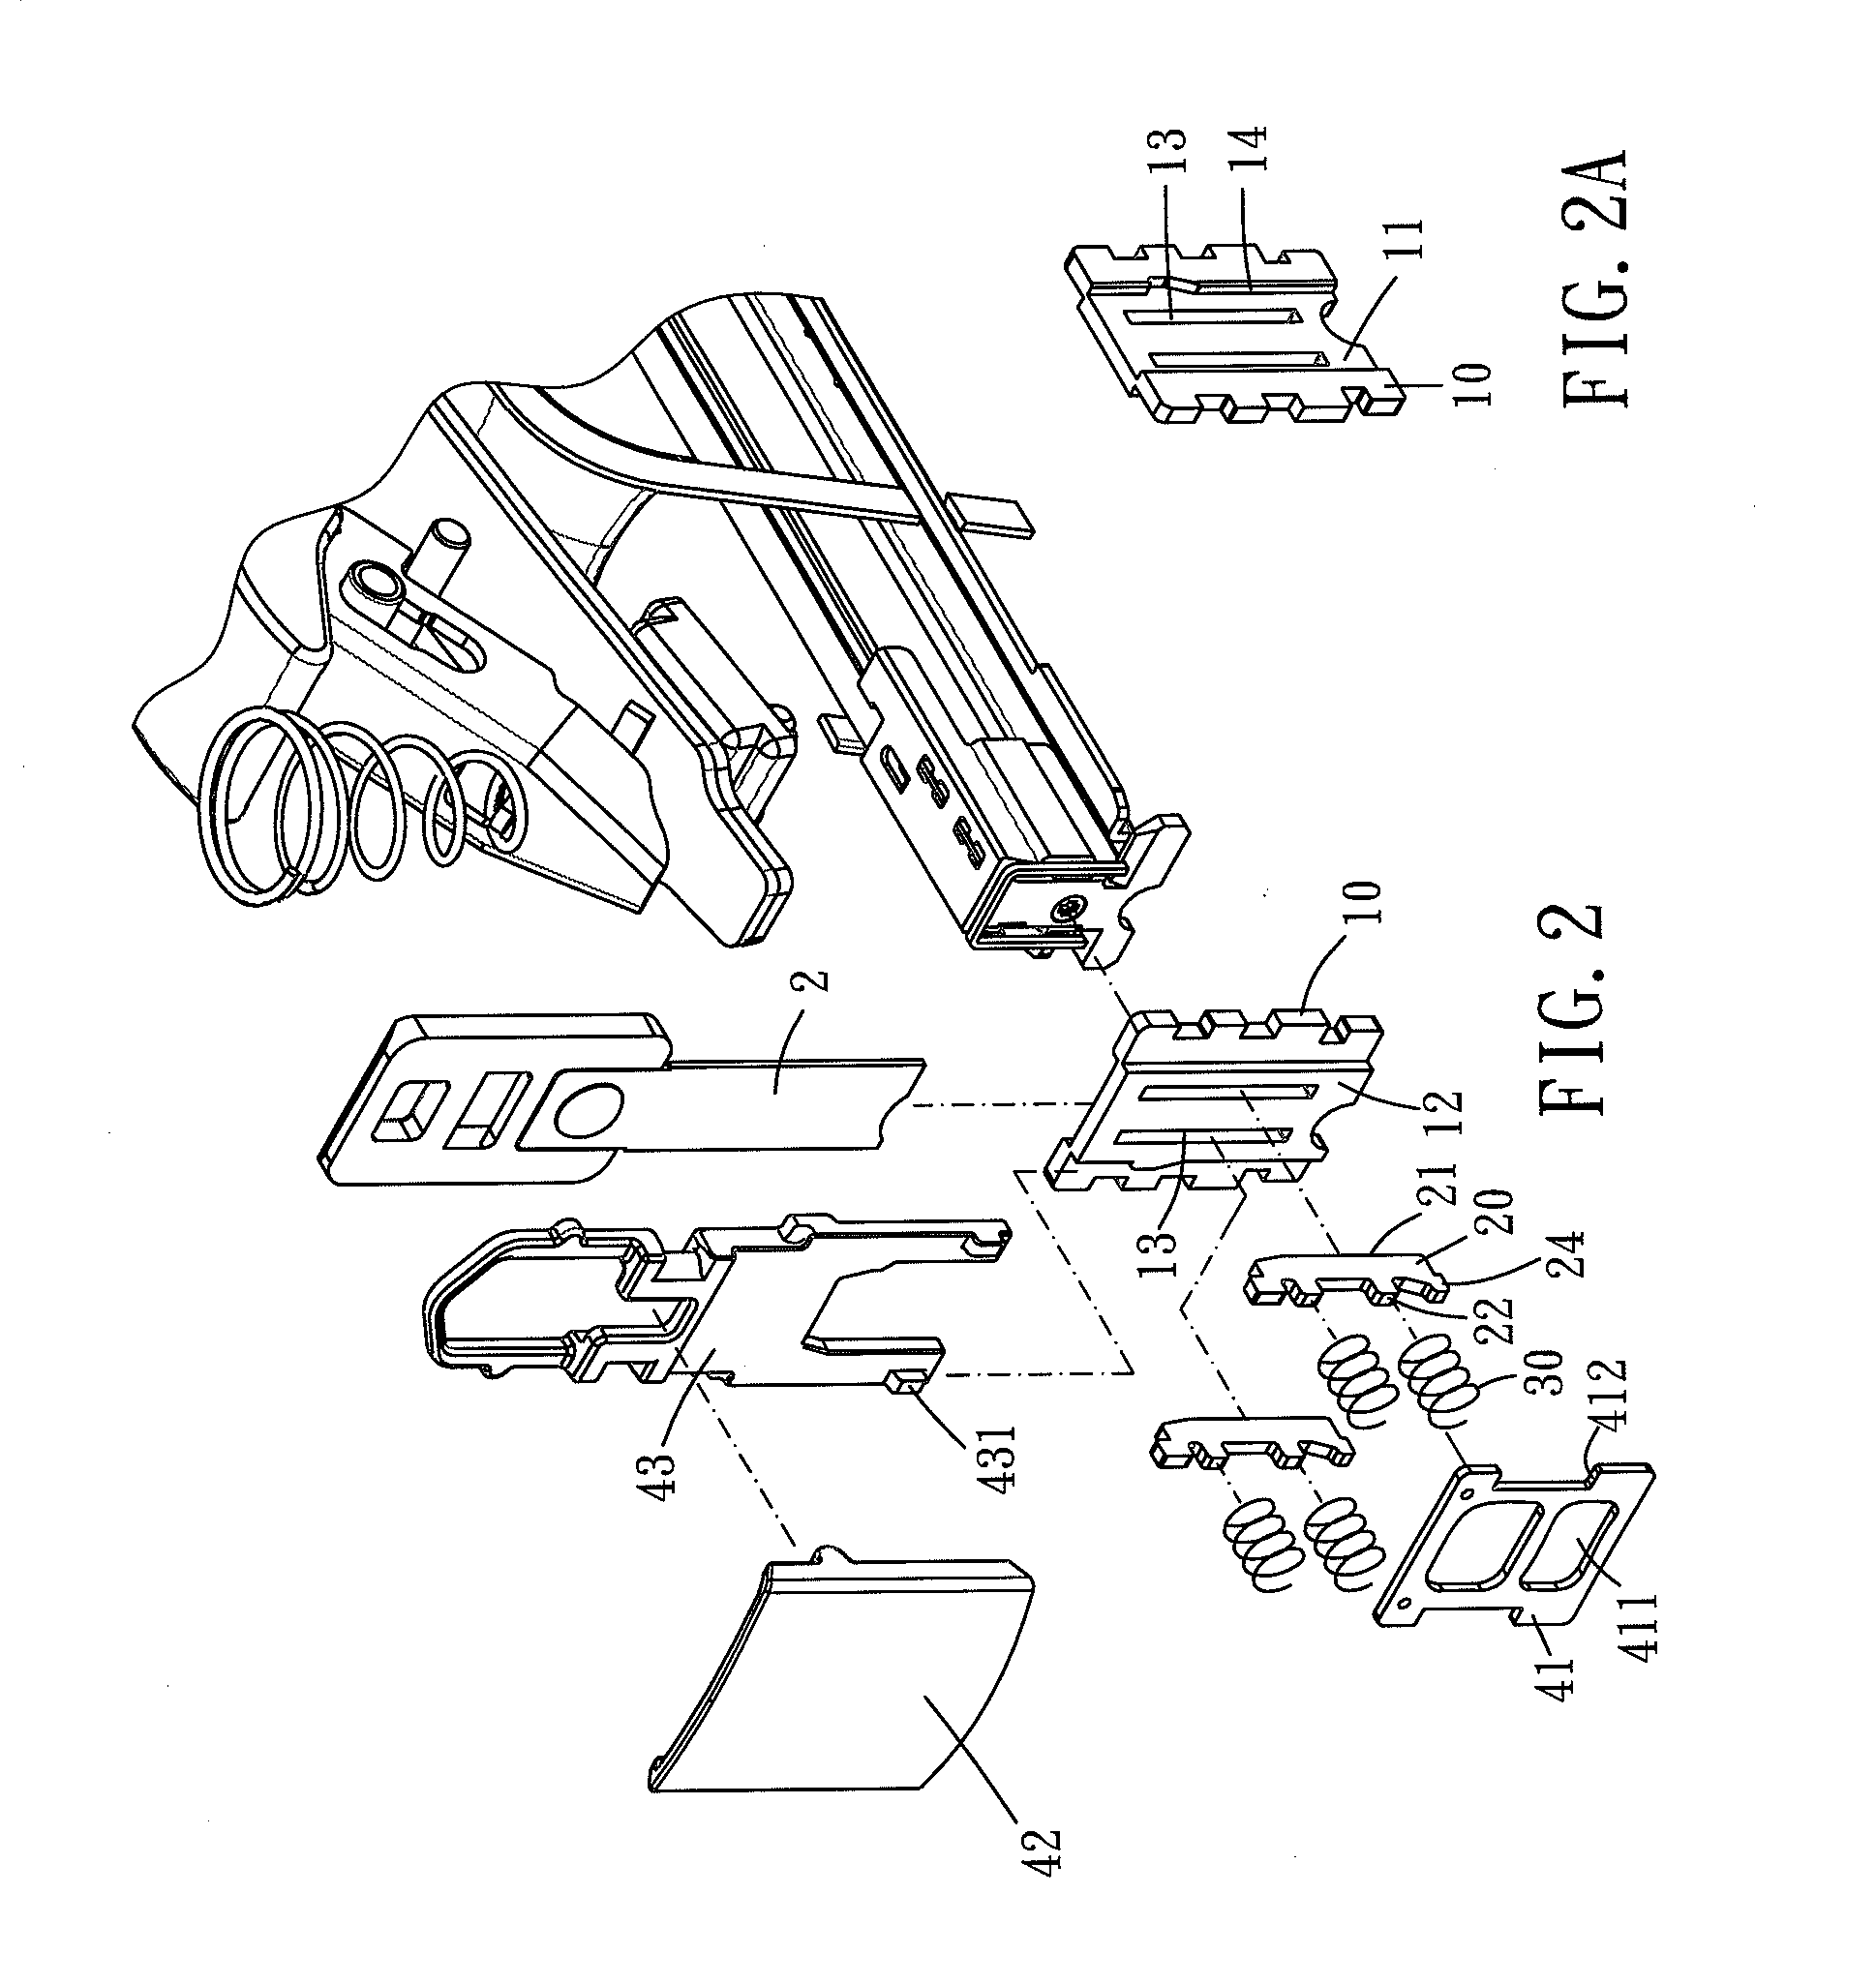 Nail guiding structure and nail gun comprising the same